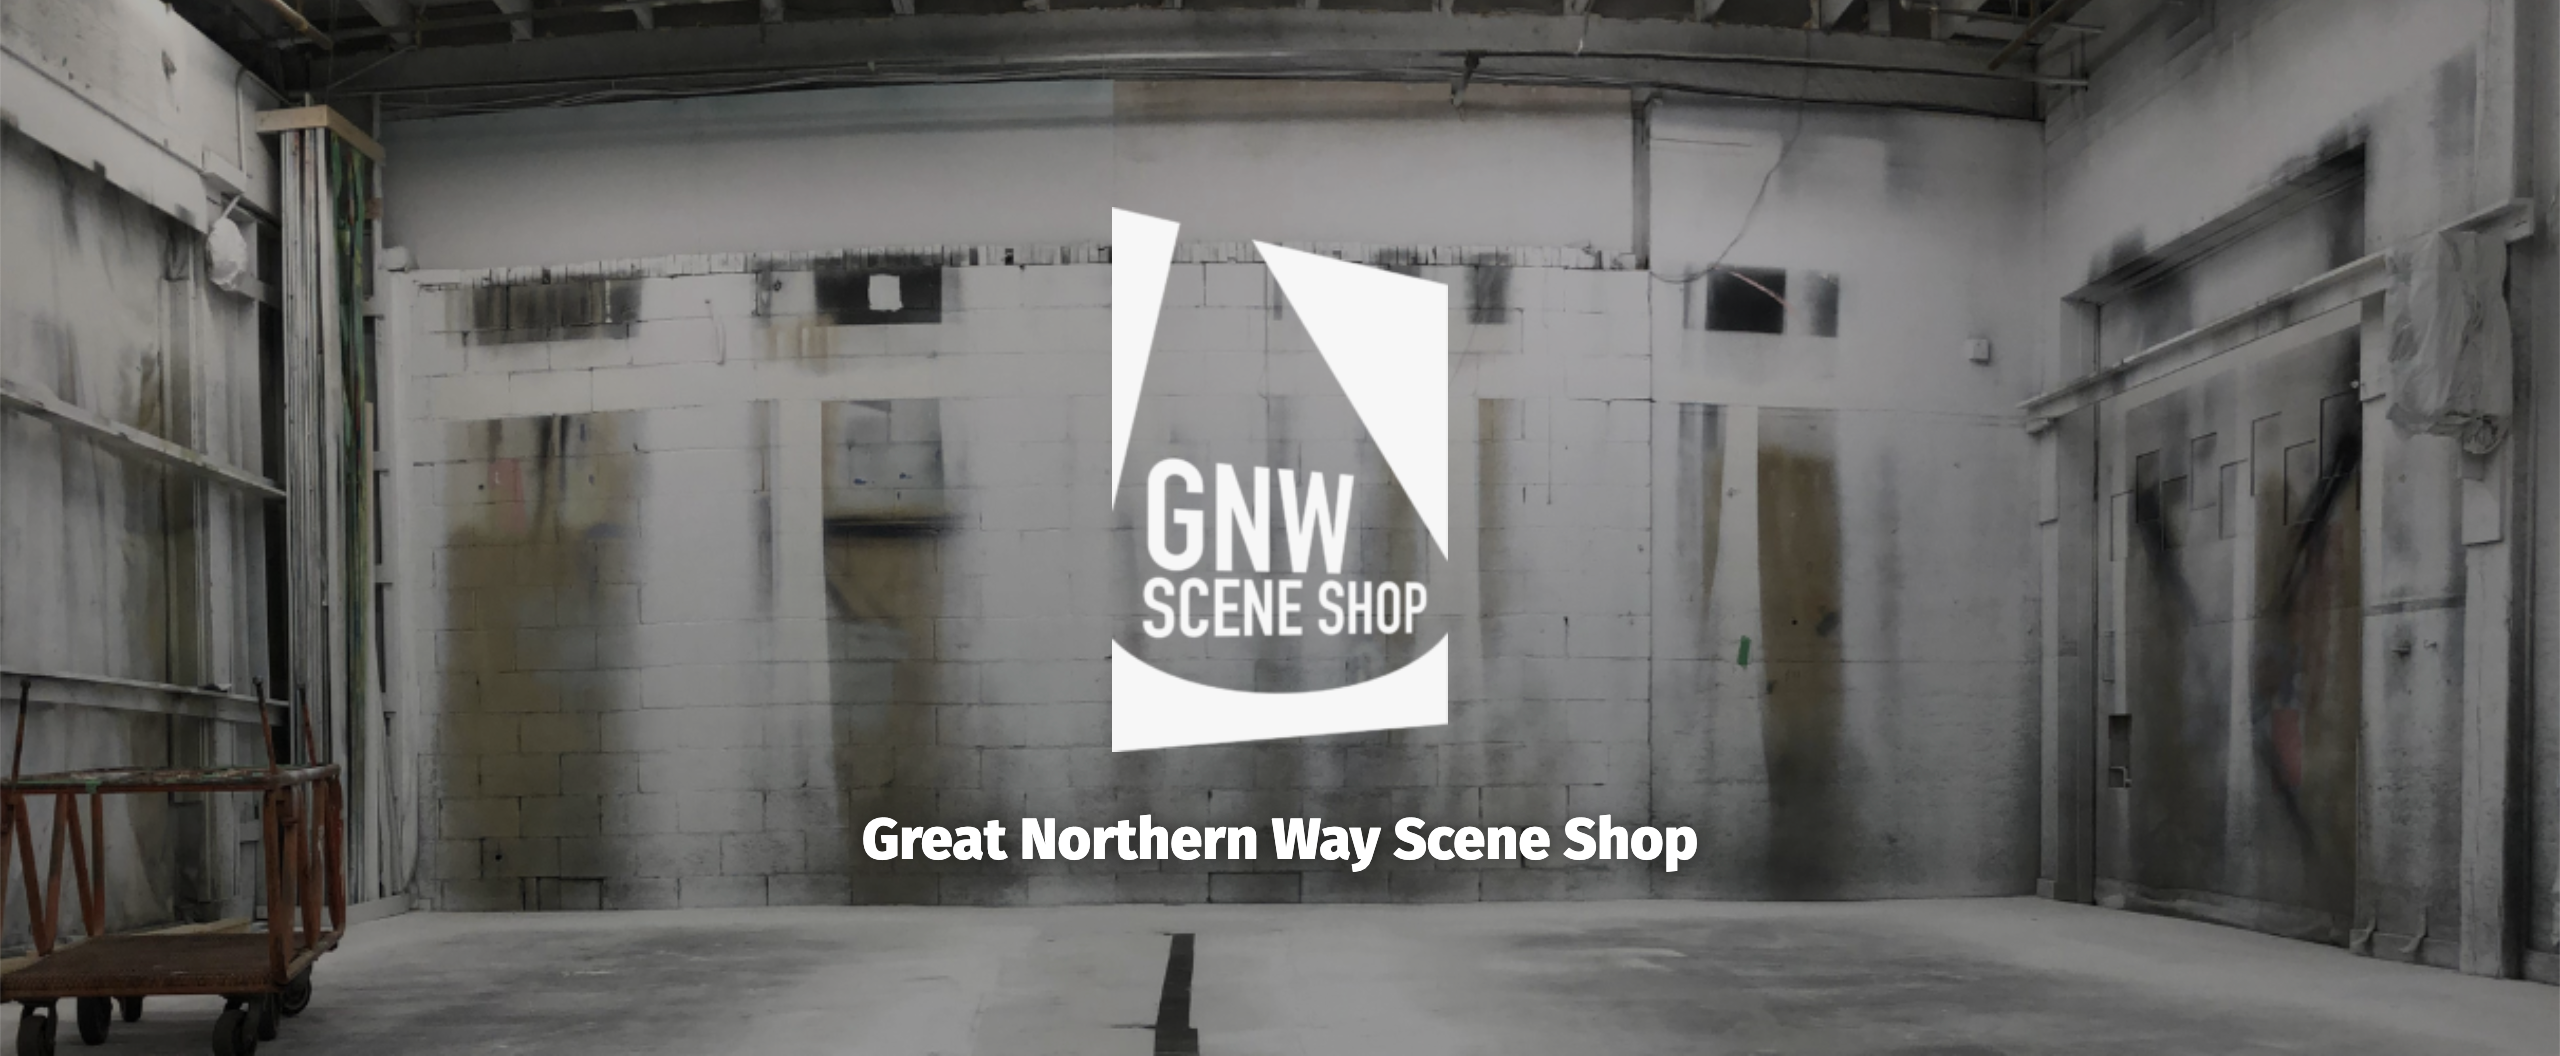 Great Northern Way Scene Shop Sponsorship Banner